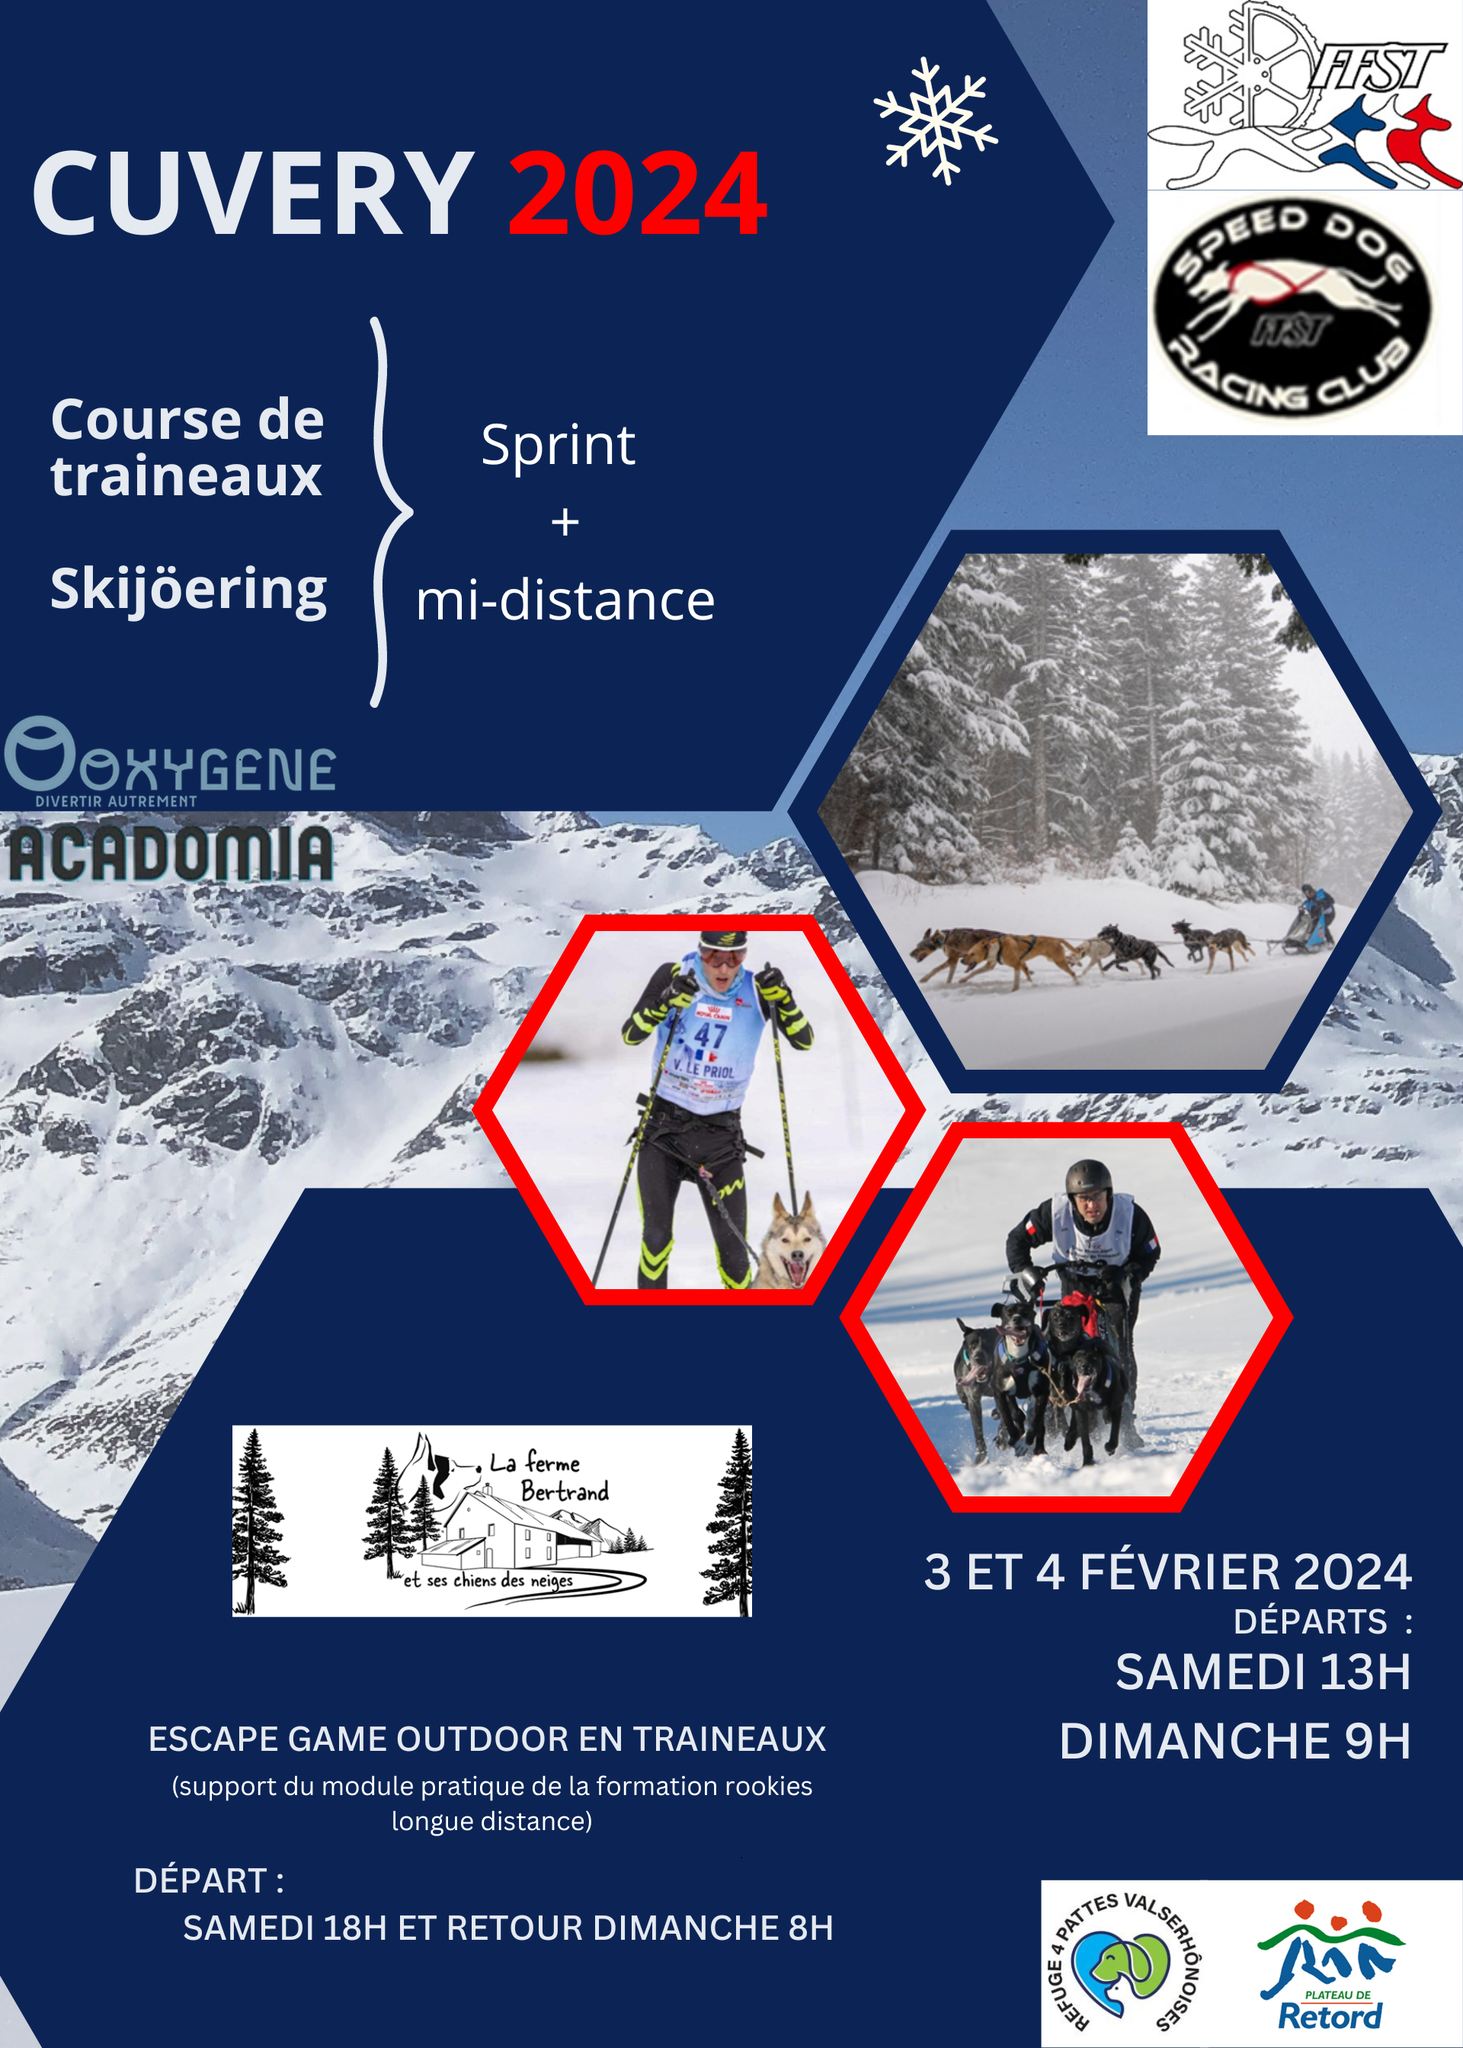 Course de Cuvry : ski-joring, traneau sprint et mid // ANNULEE